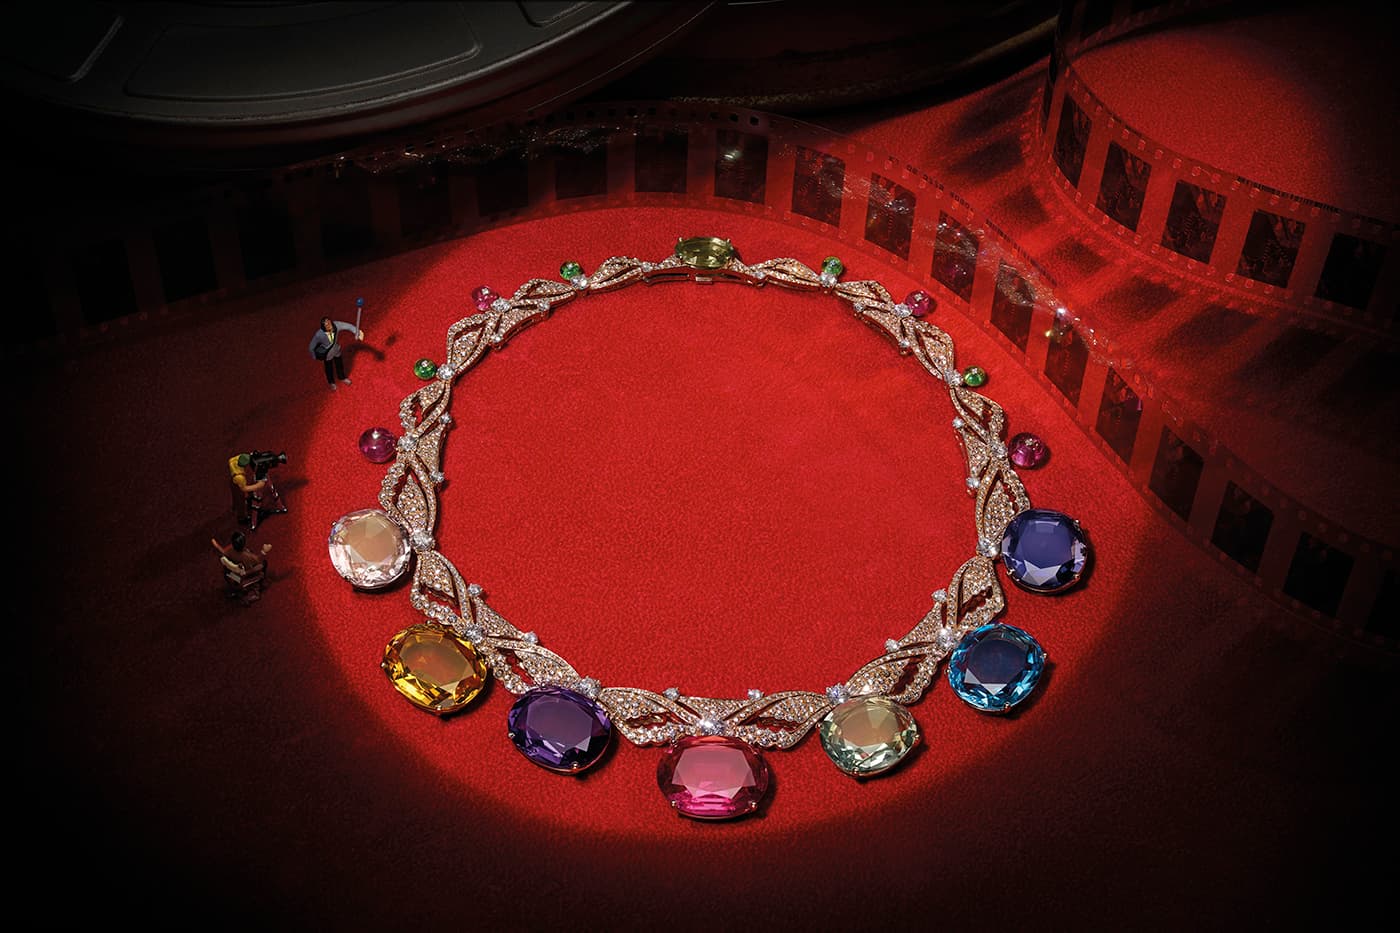 Bvlgari 'Cinemagia' collection 'Fairy Wings' necklace with topaz, rubellite, citrine, amethyst, morganite, iolite, green quartz, apatite and diamonds in white gold